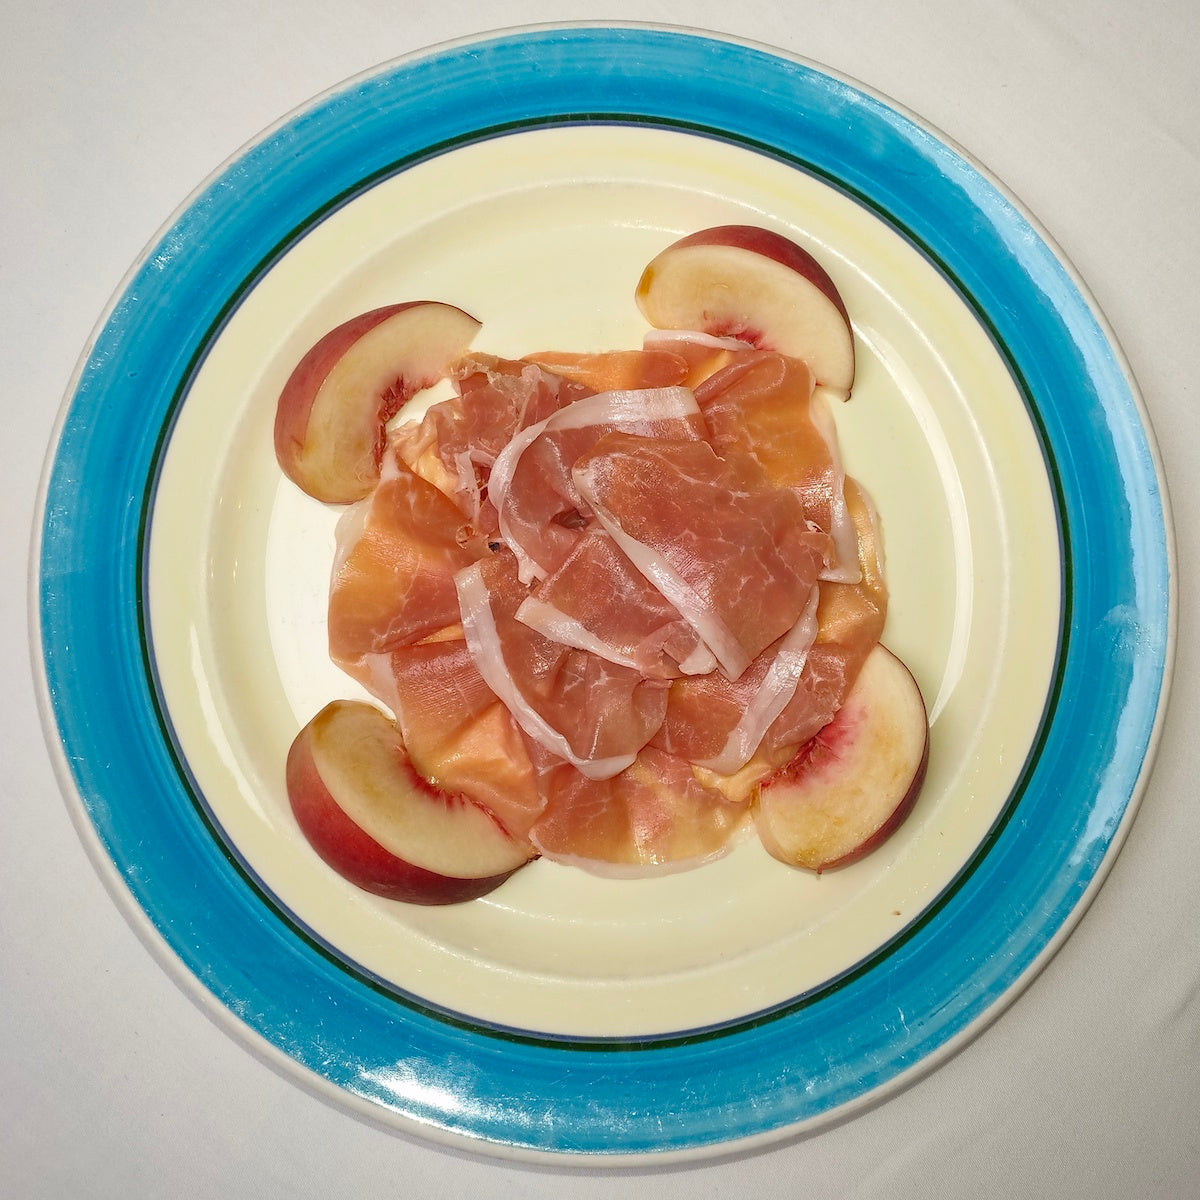 Parma Ham & Seasonal Fruits